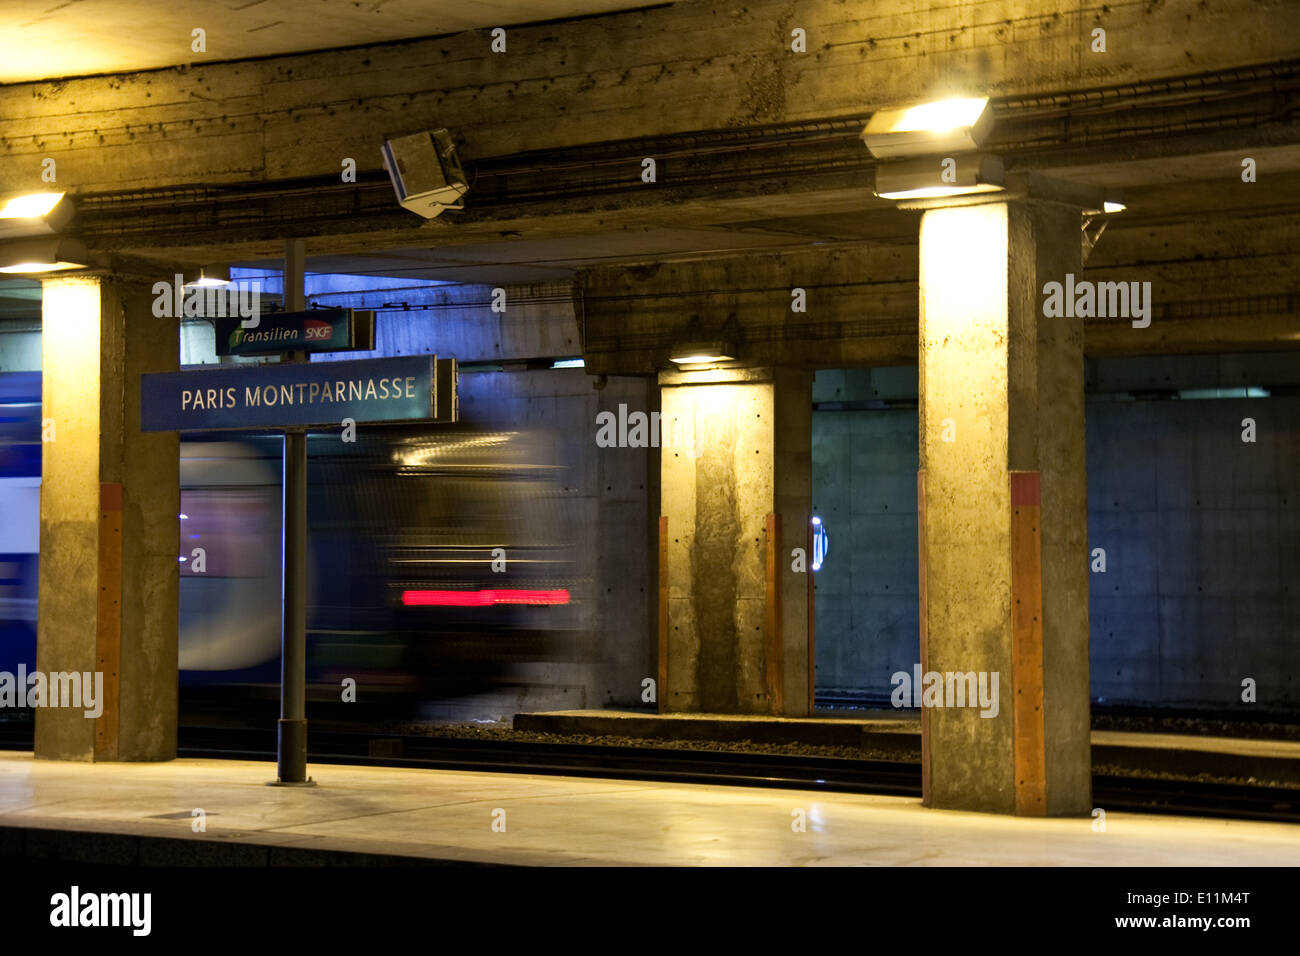 Eisenbahn Im Bahnhof Montparnasse, Paris, Frankreich - Zug im Bahnhof Montparnasse, Paris, Frankreich Stockfoto